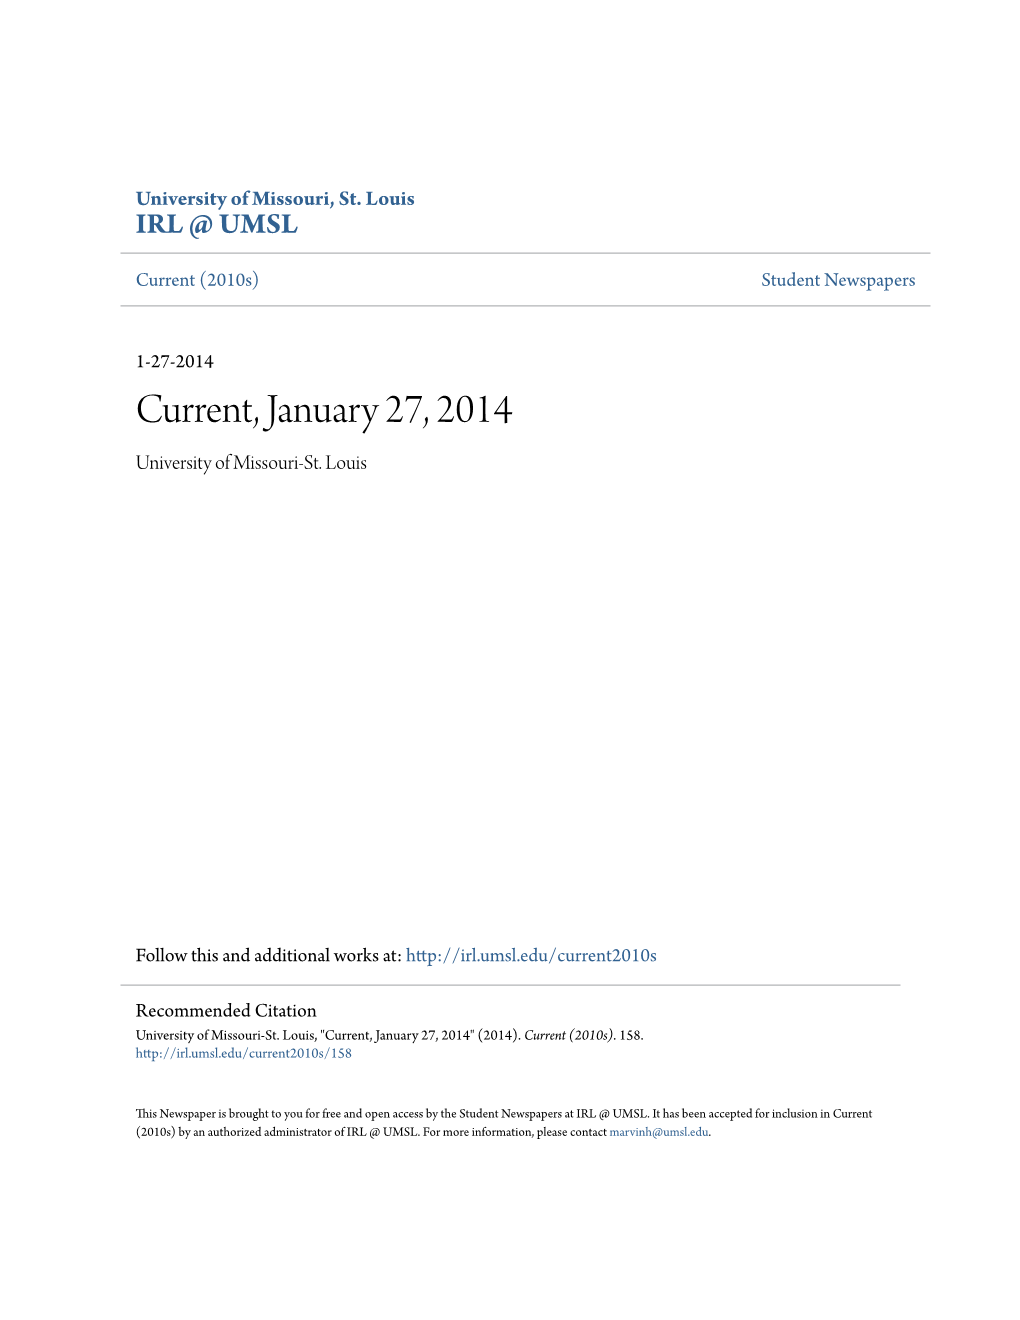 Current, January 27, 2014 University of Missouri-St